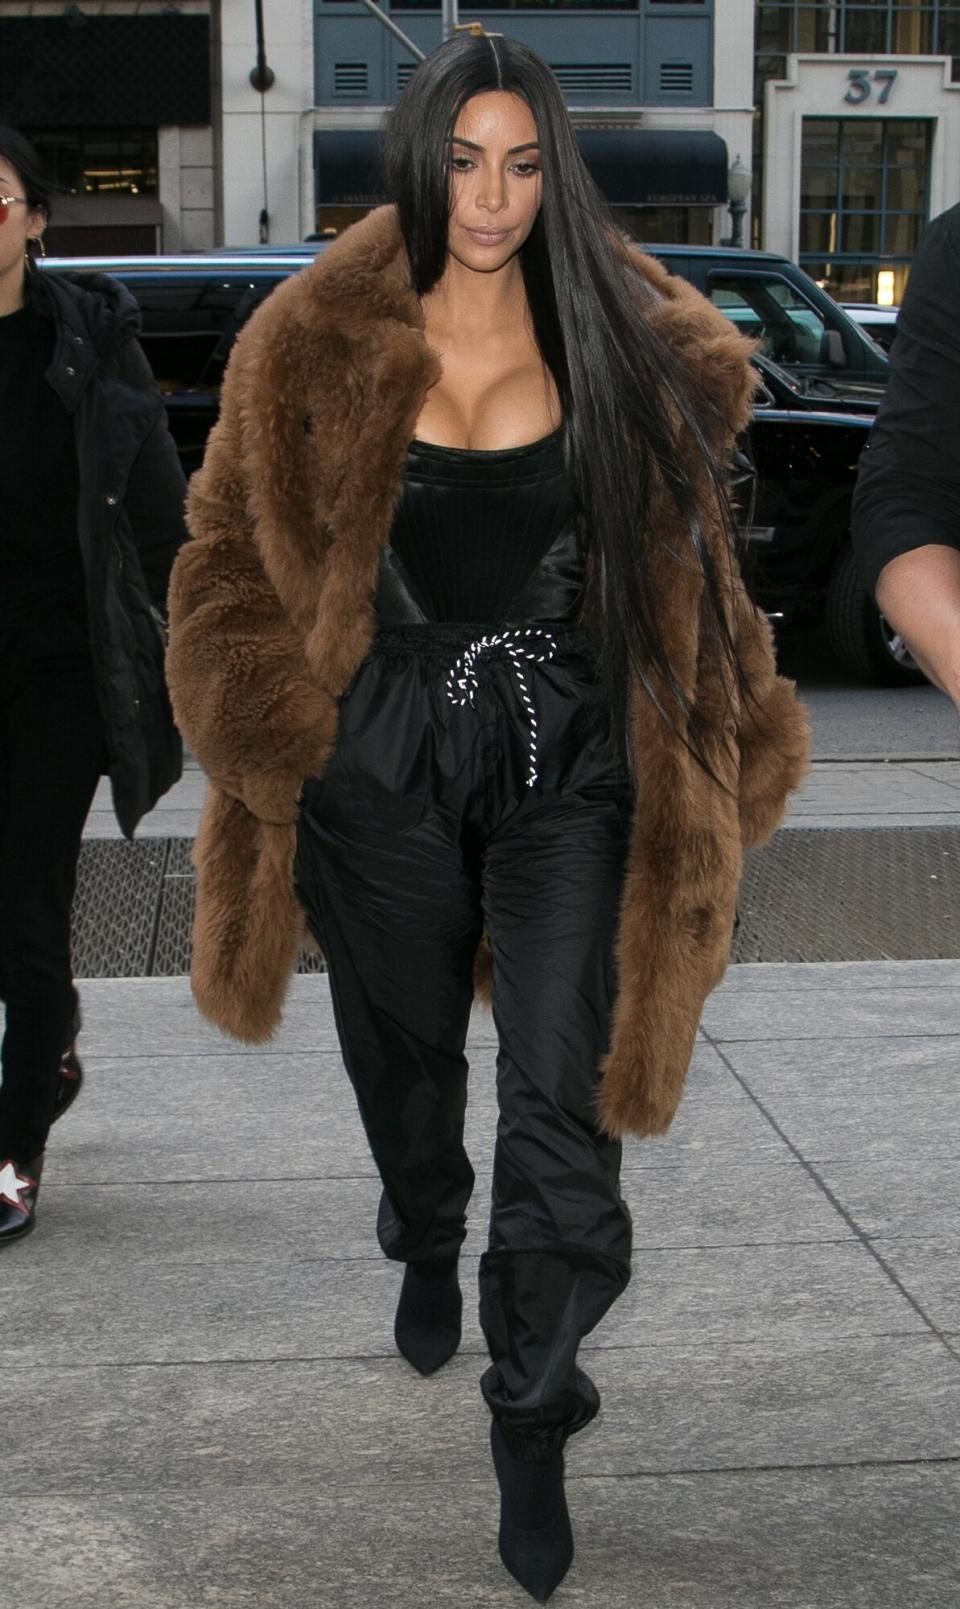 Kim Kardashian West is seen on February 16, 2017 in New York City